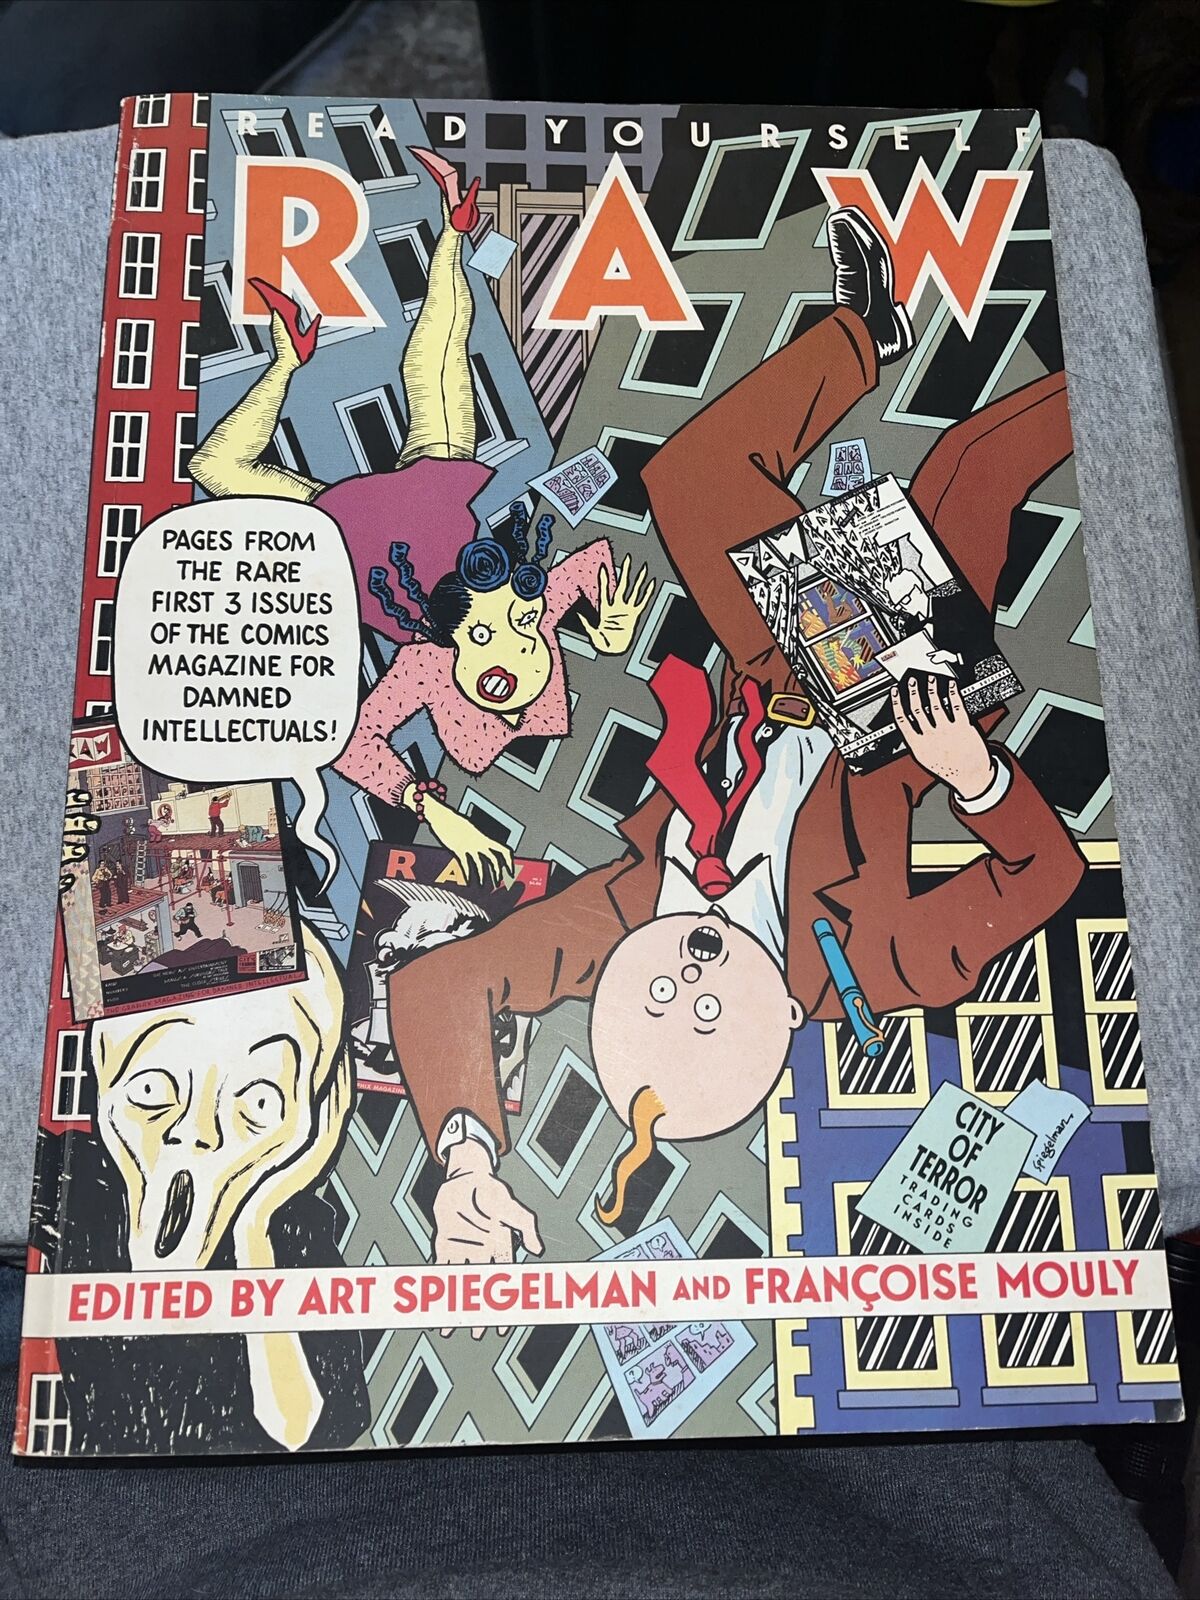 Read Yourself Raw - Art Spiegelman - Francoise Mouly - 1987 1st Ed